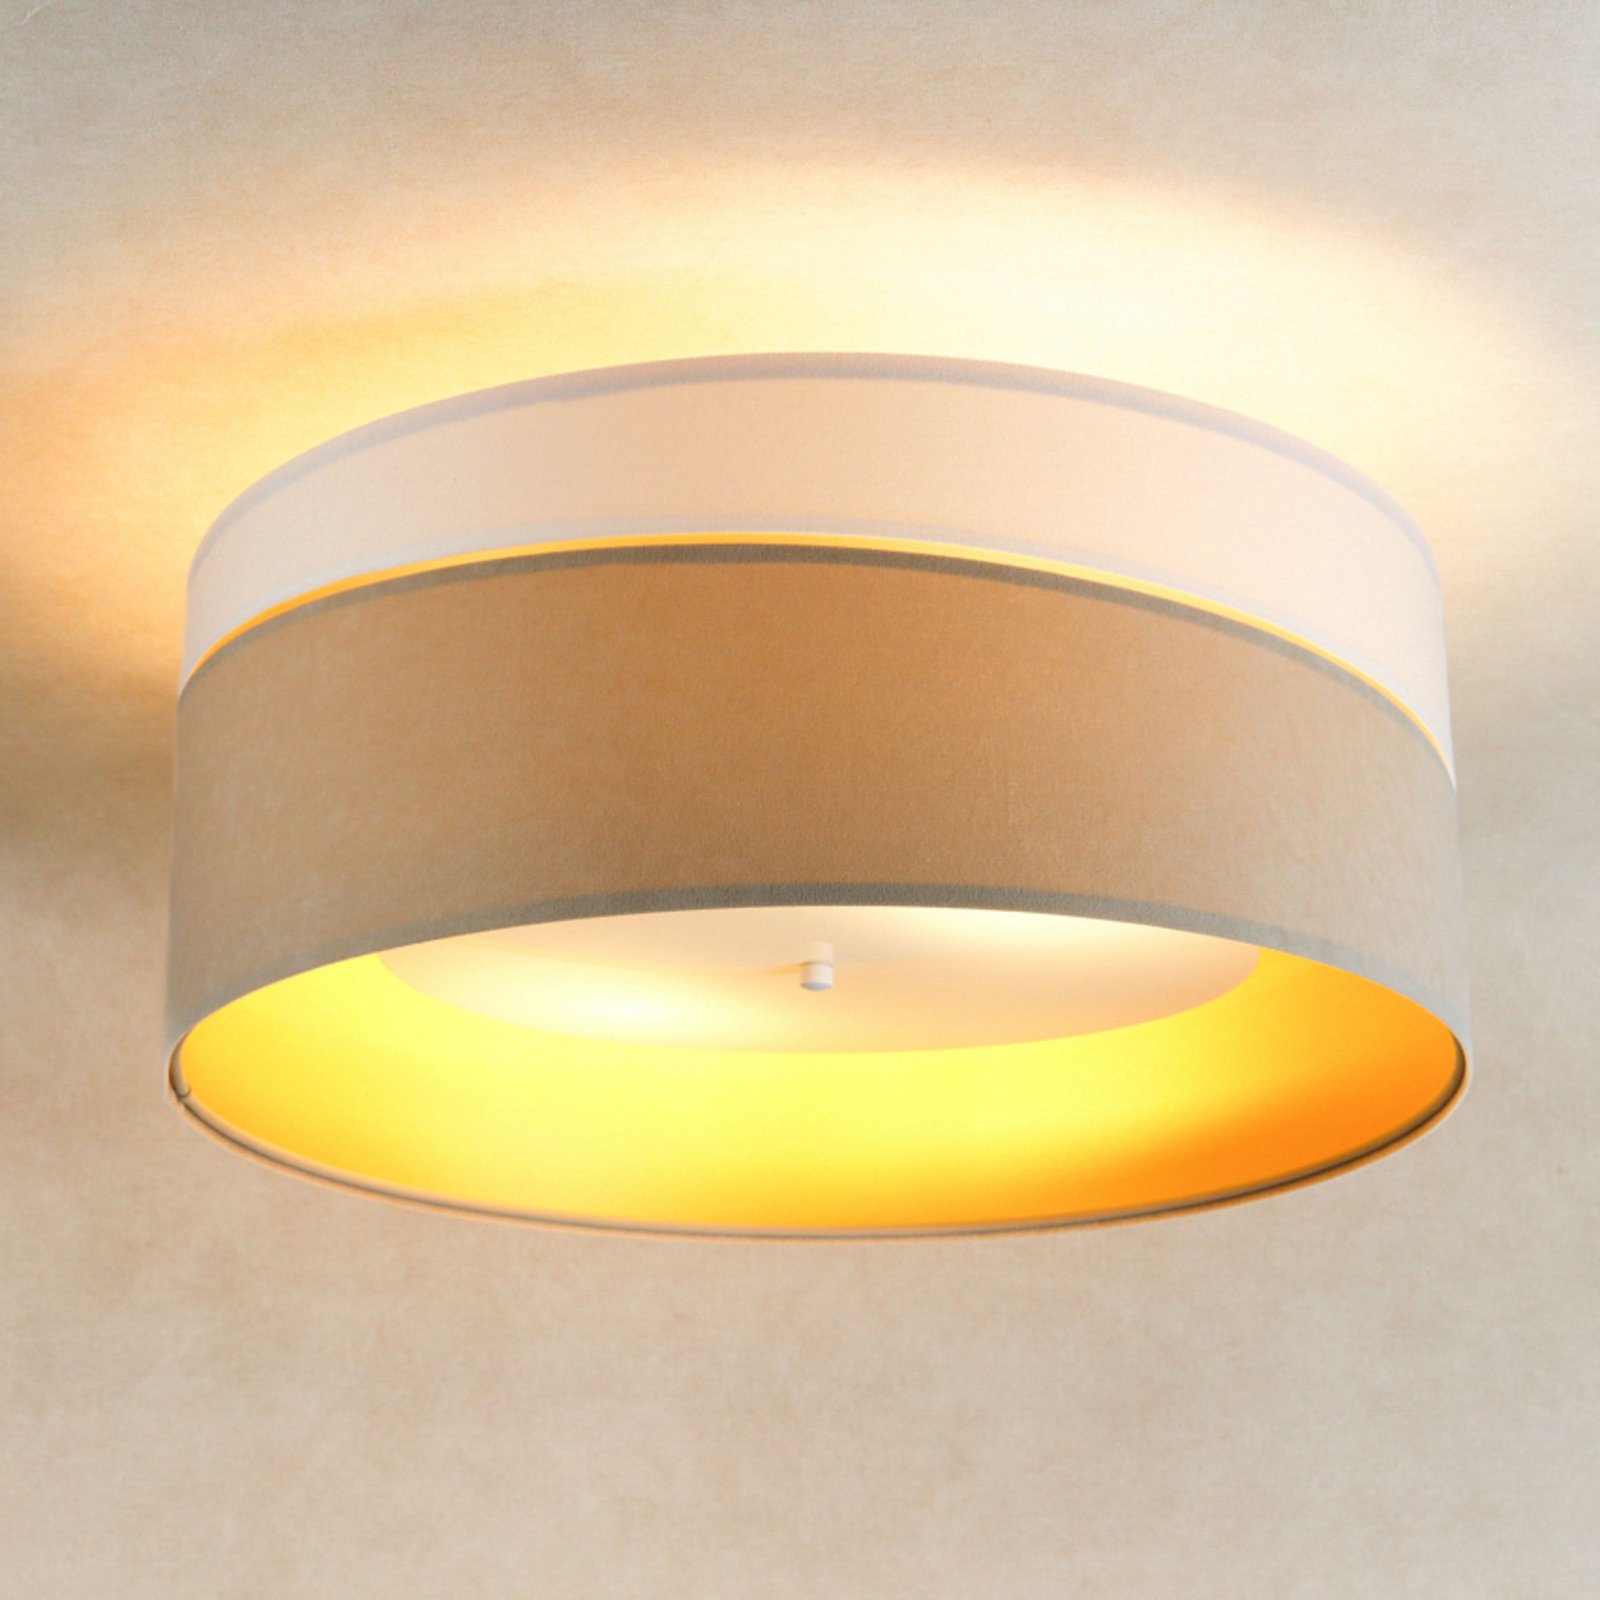 Susan ceiling light, white/beige/gold